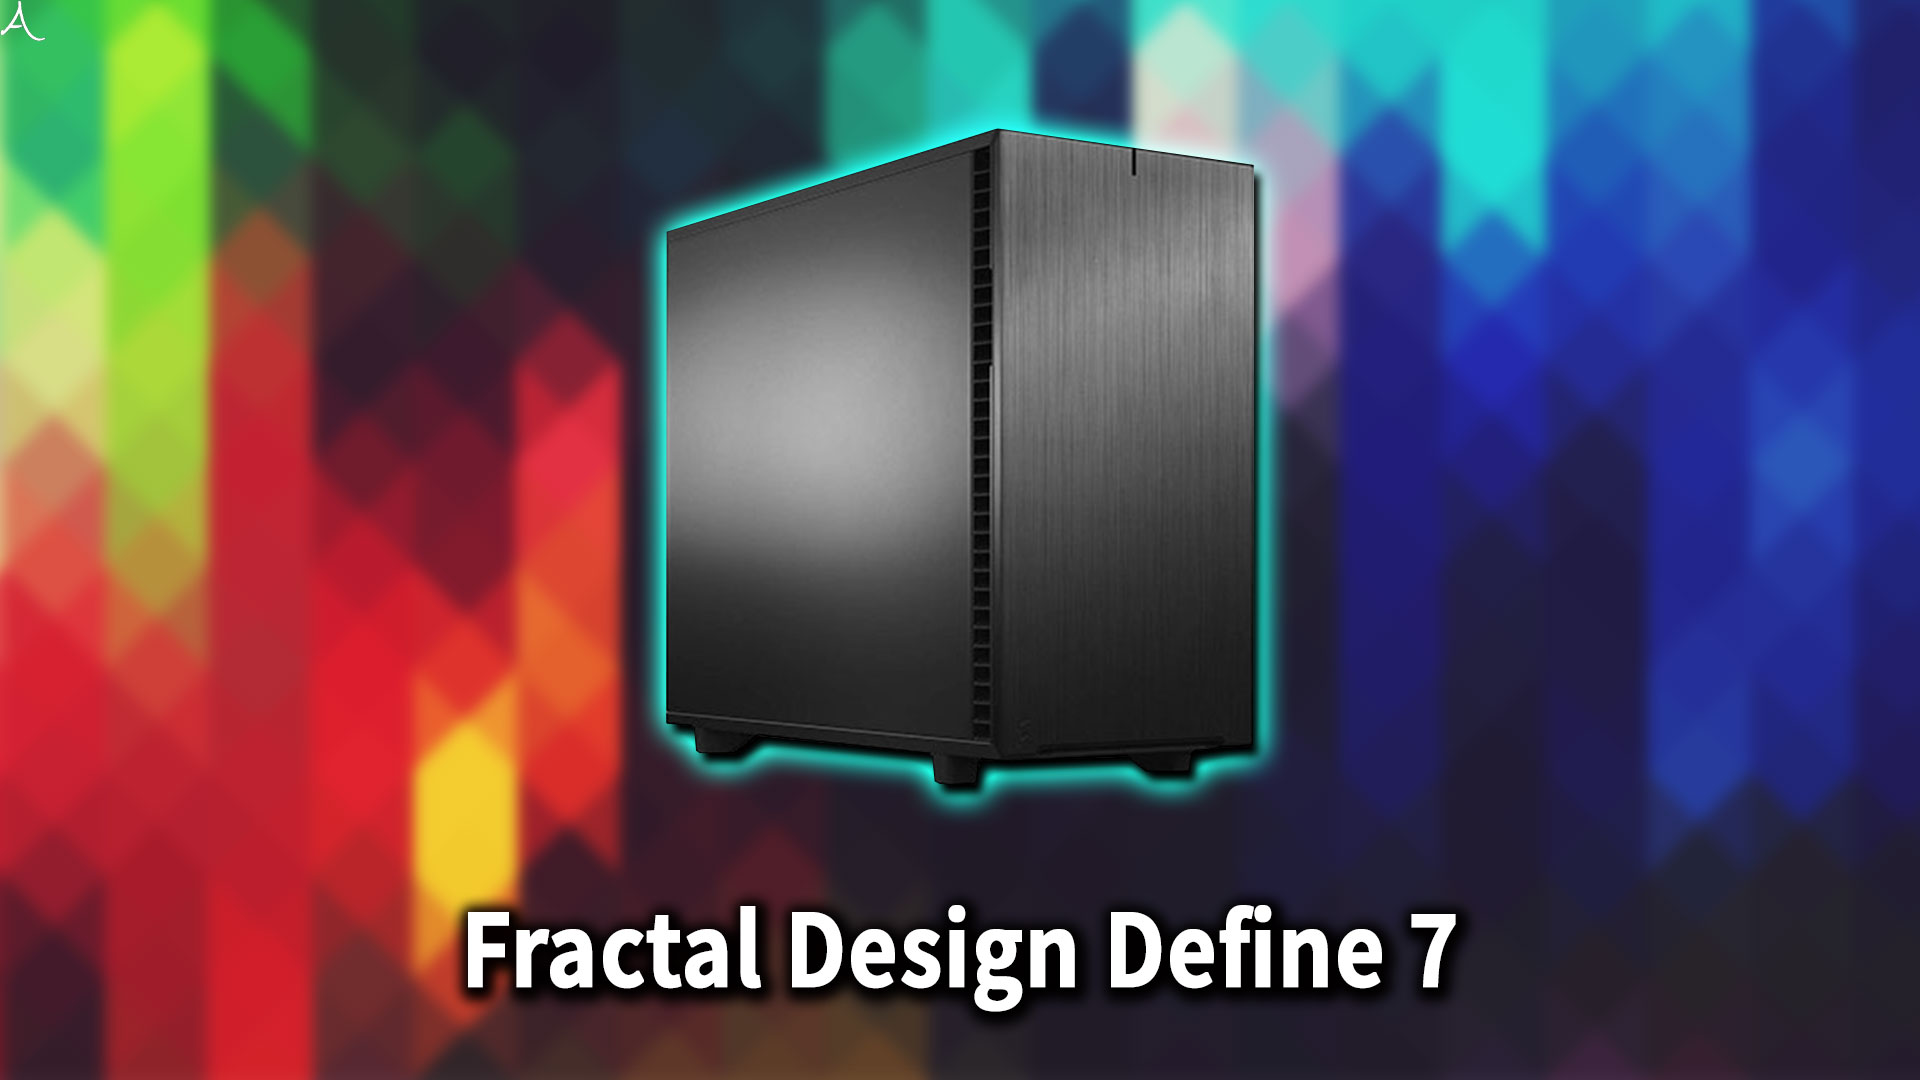 ｢Fractal Design Define 7｣のサイズ・大きさはどれくらい？